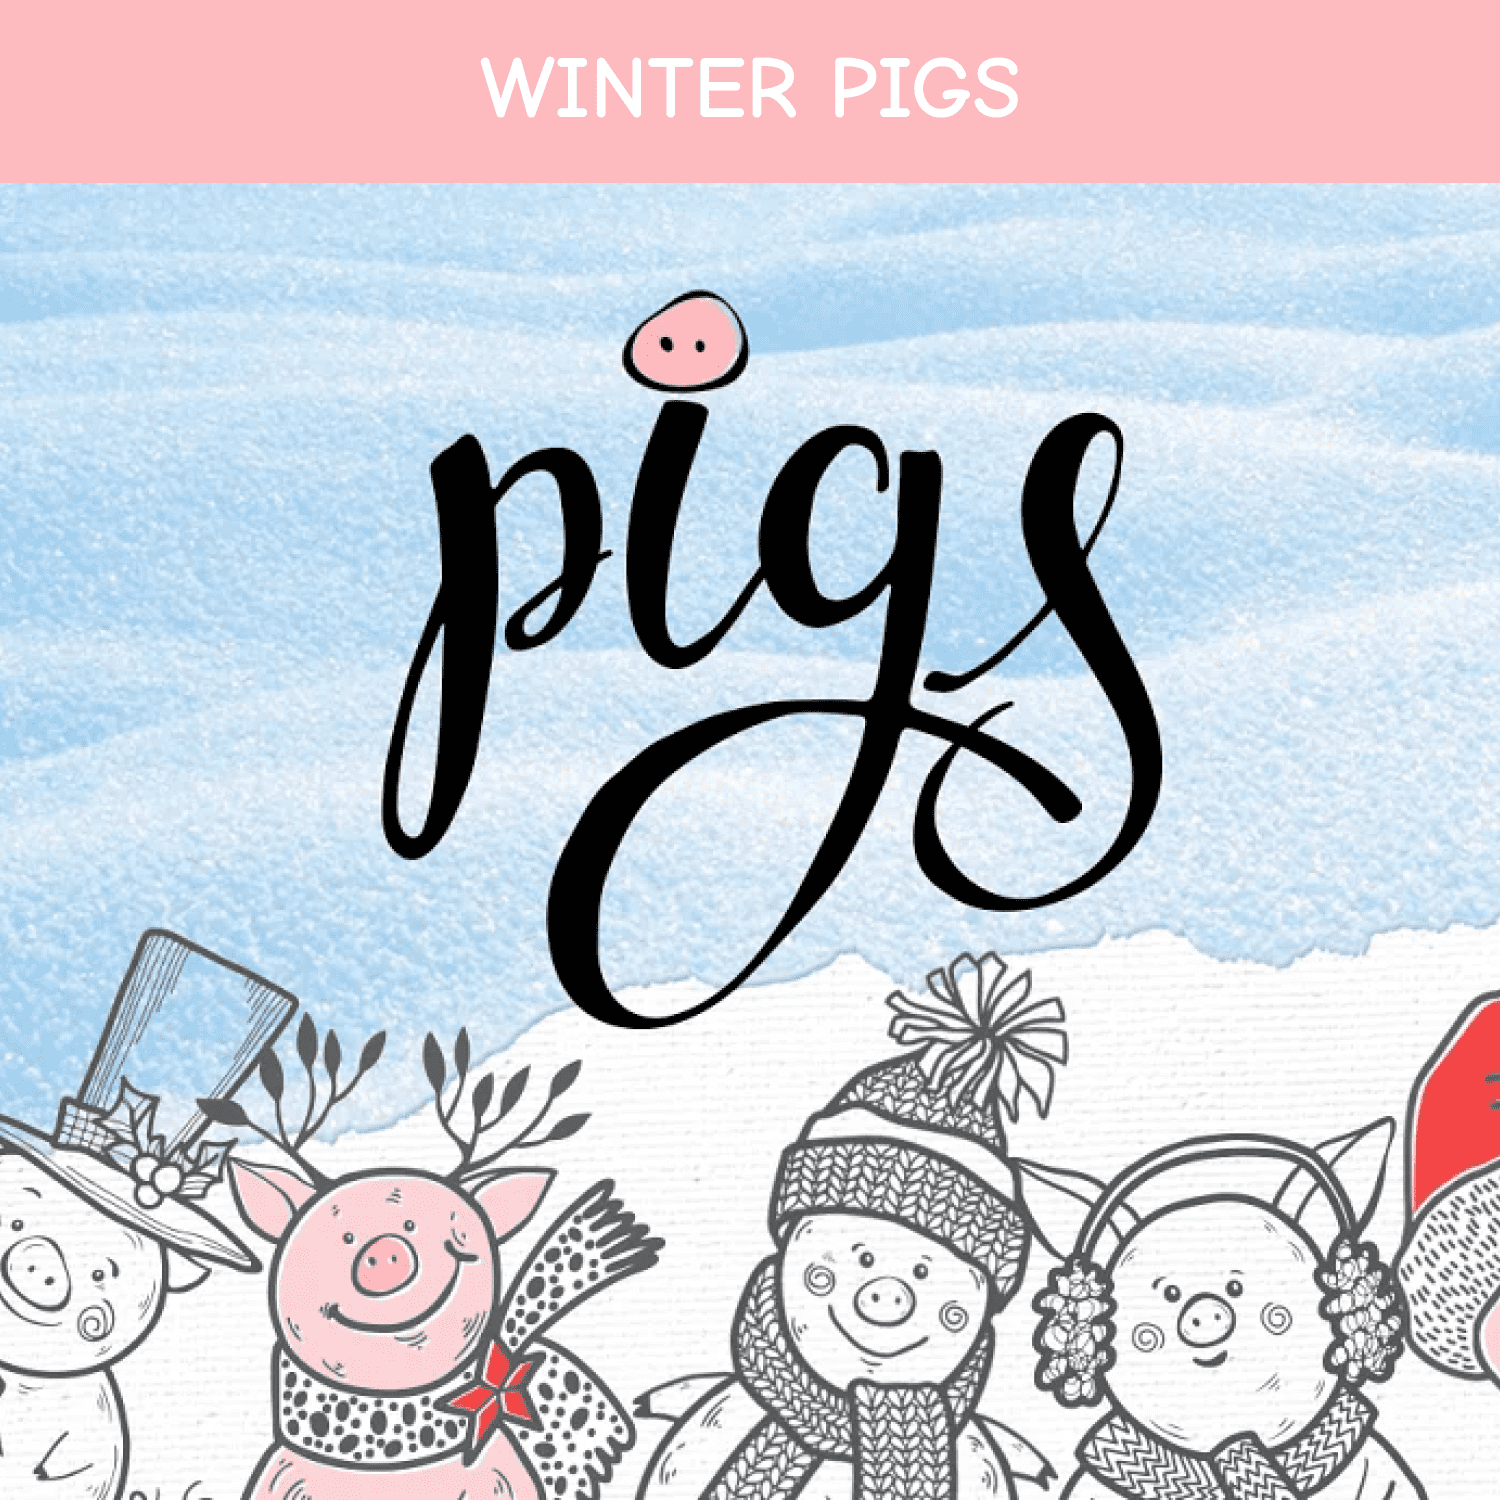 Winter pigs.